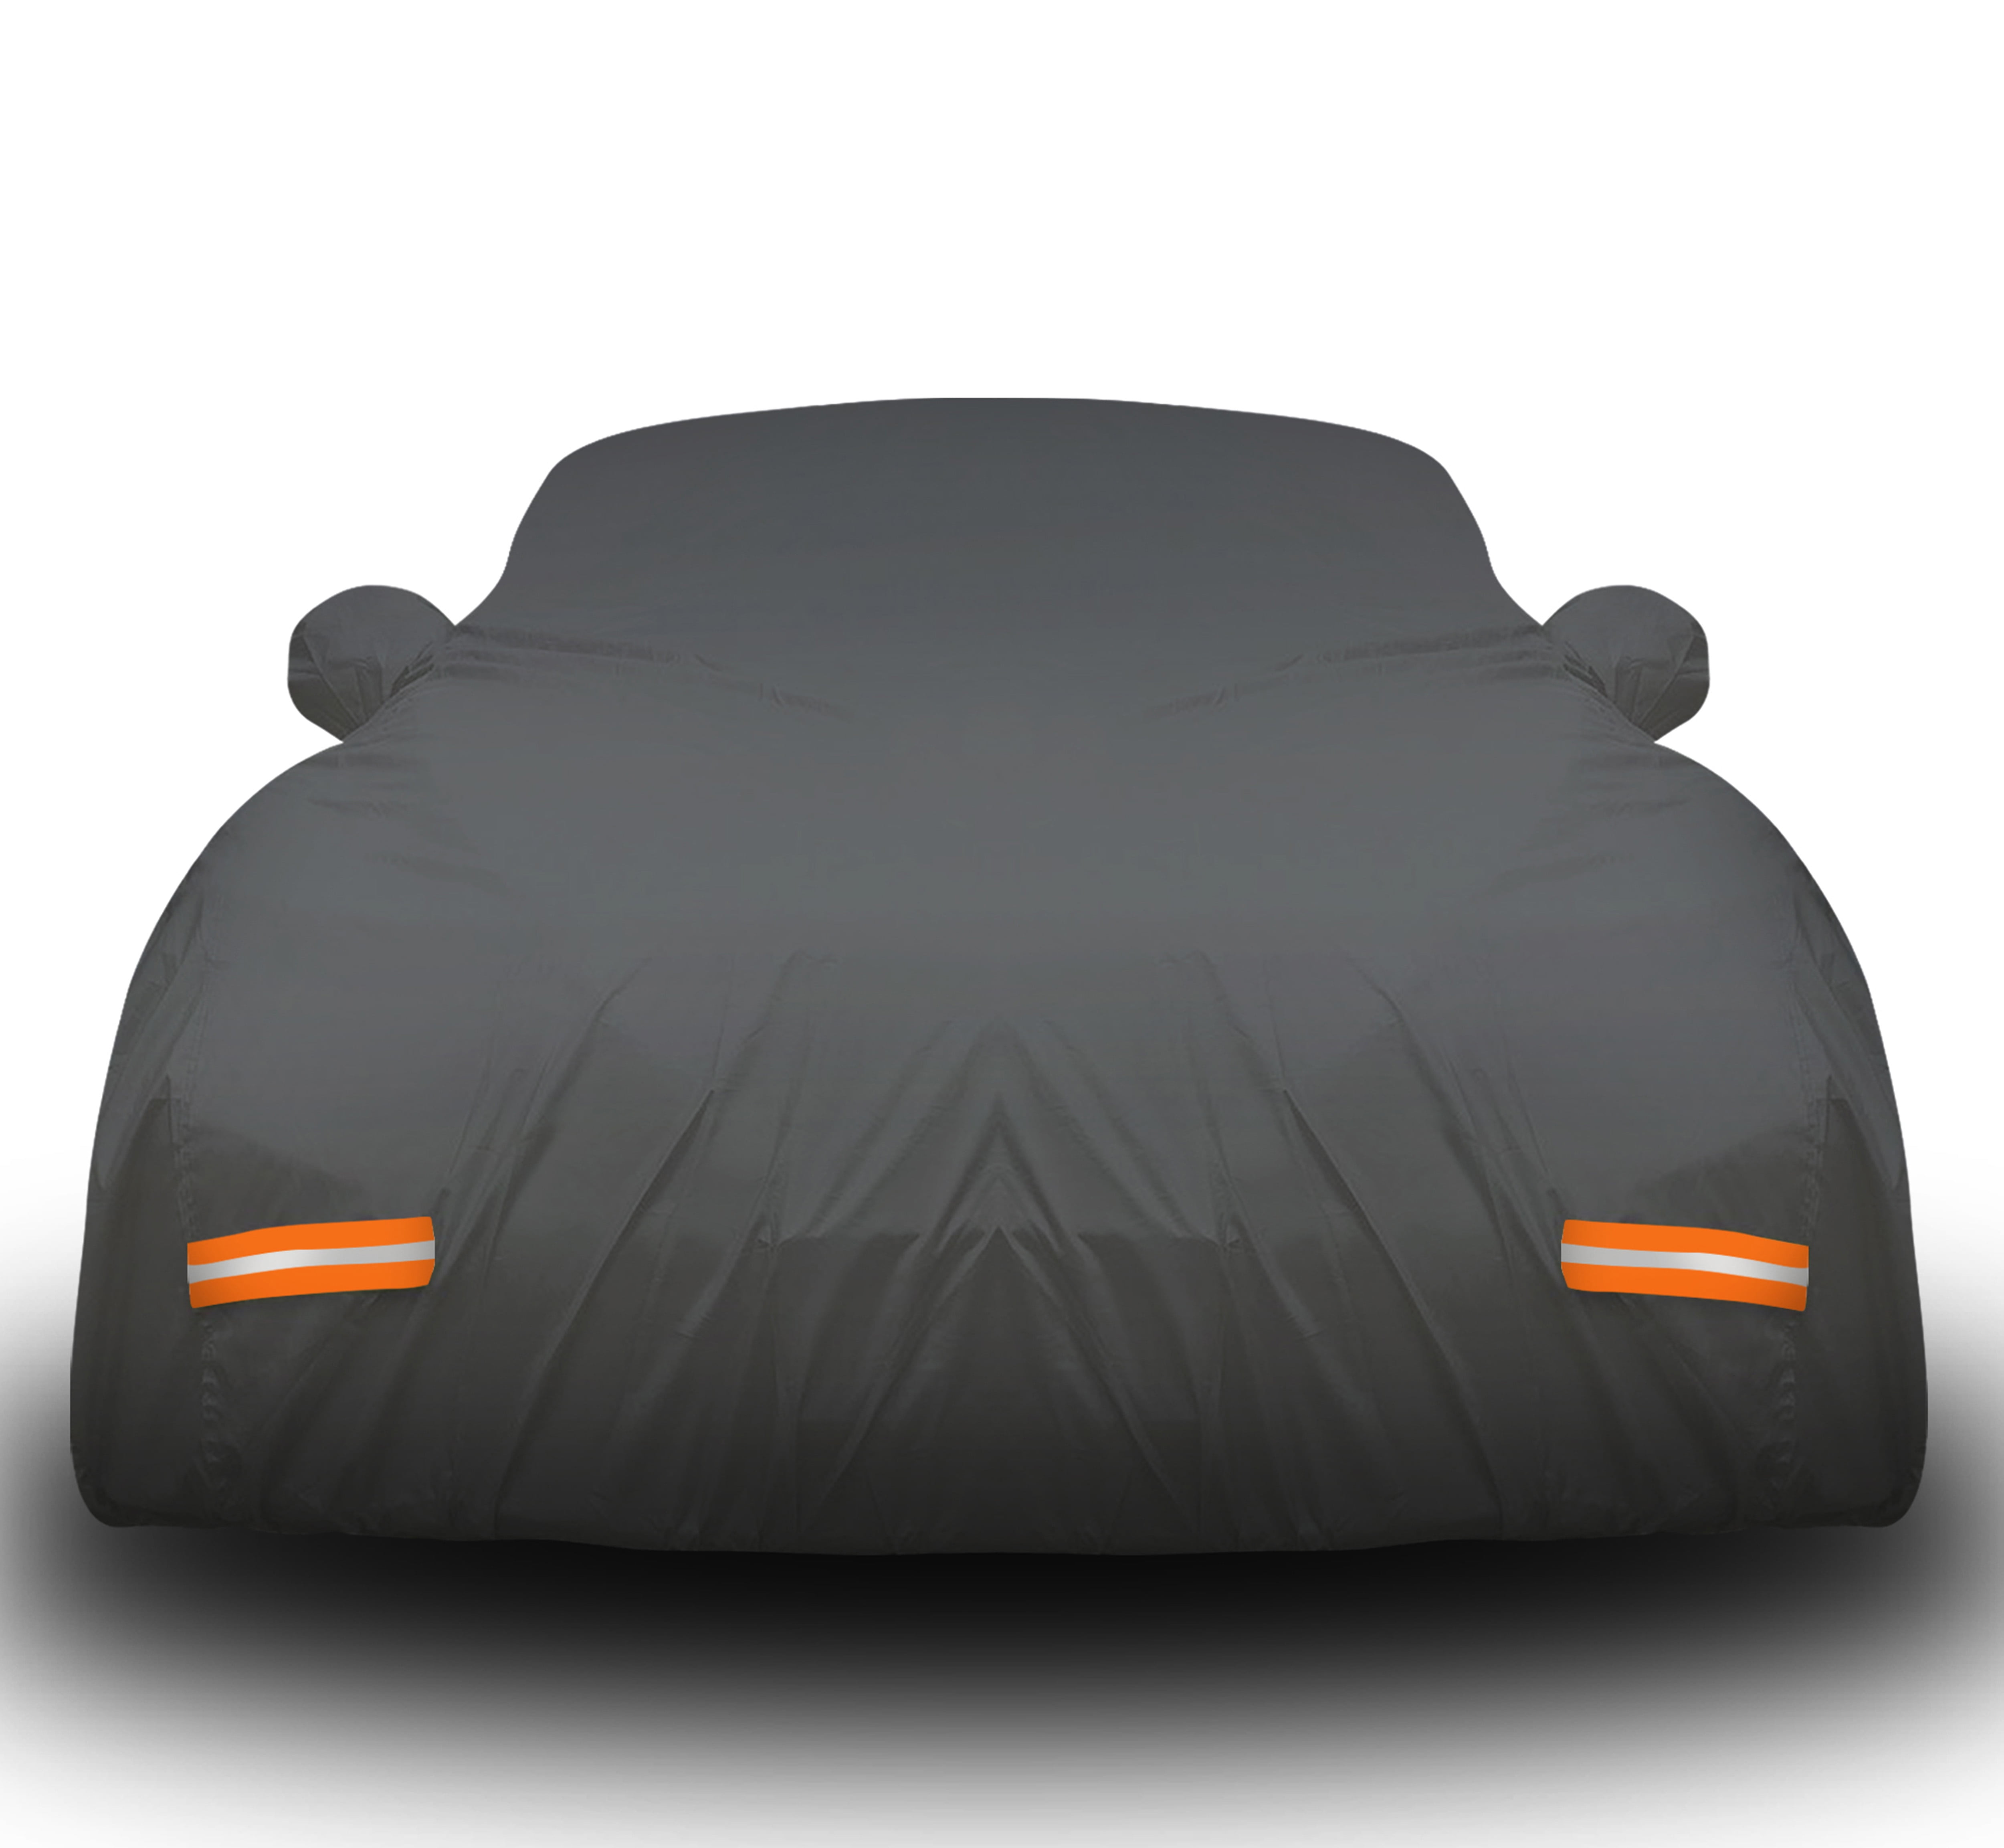  YIXIN Waterproof Car Covers for 2003-2009 Nissan 350Z Car Covers  190T Covers Customer Fit 100% Waterproof Windproof Strap & Double Door  Zipper Up to 173” L (Black) (Black) : Automotive